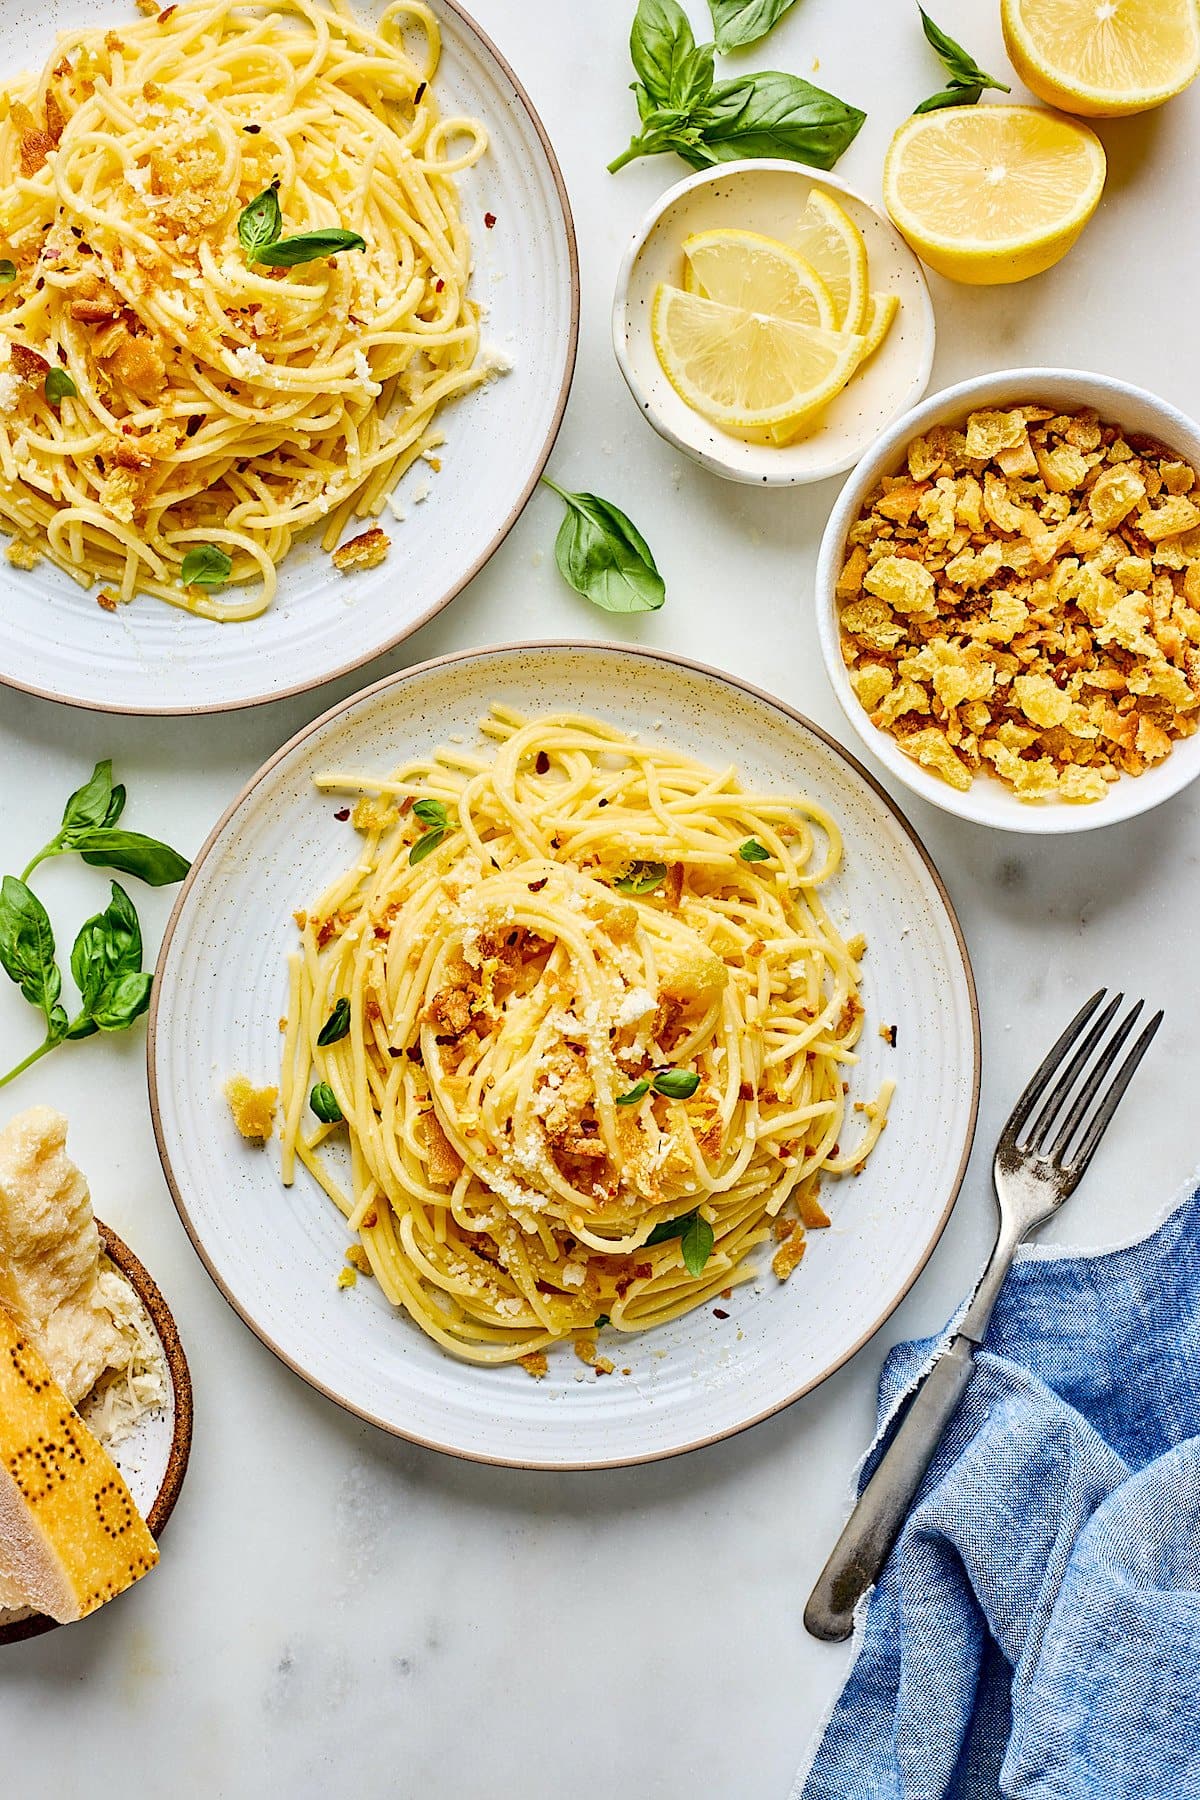 Mealime - Spaghetti al Limone (Lemon Pasta) with Basil & Garlic-Roasted  Veggies